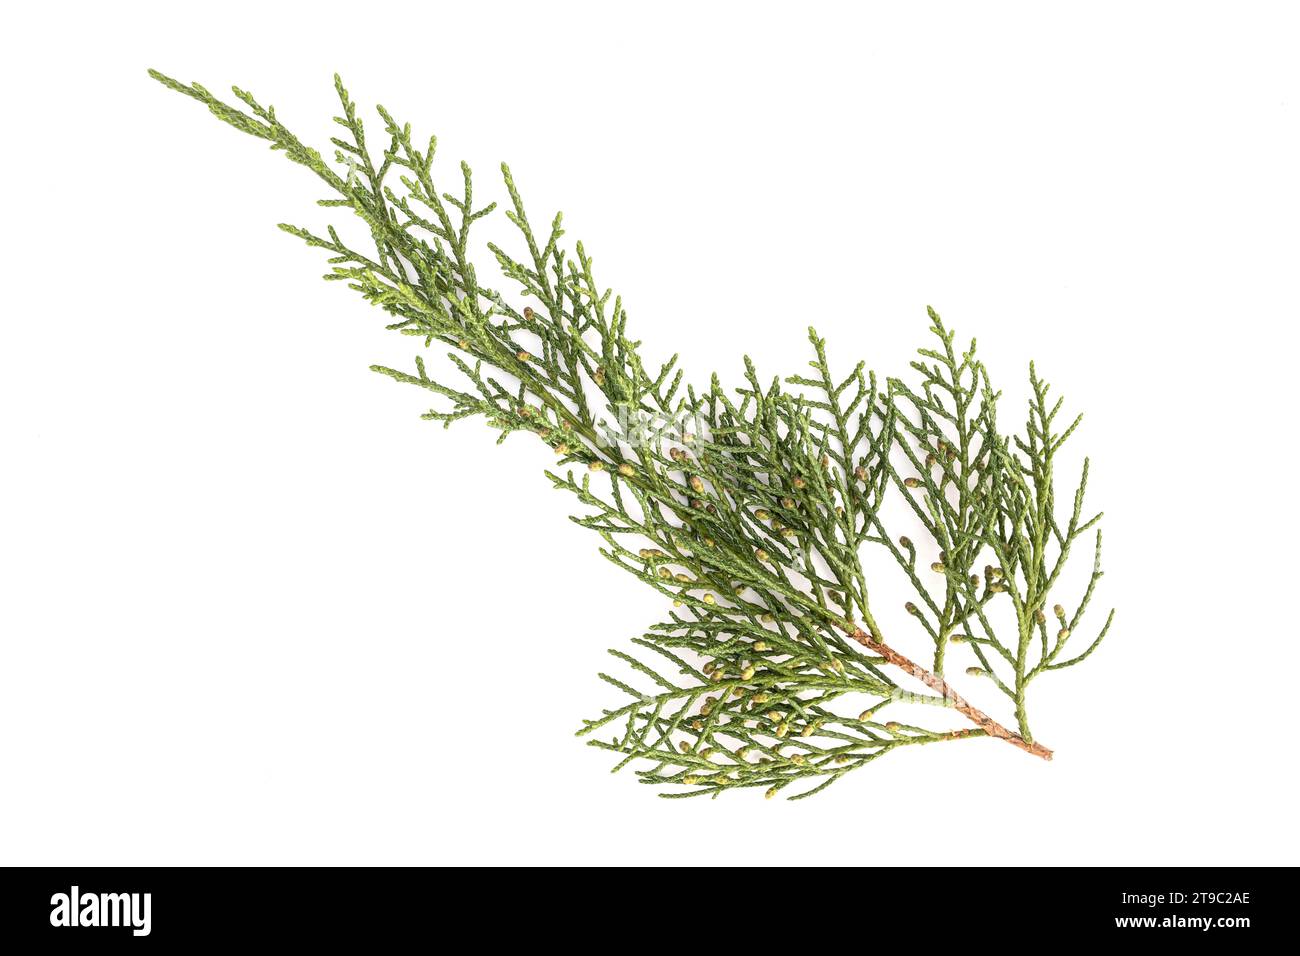 Juniperus thurifera or Spanish Juniper twig isolated on white background Stock Photo